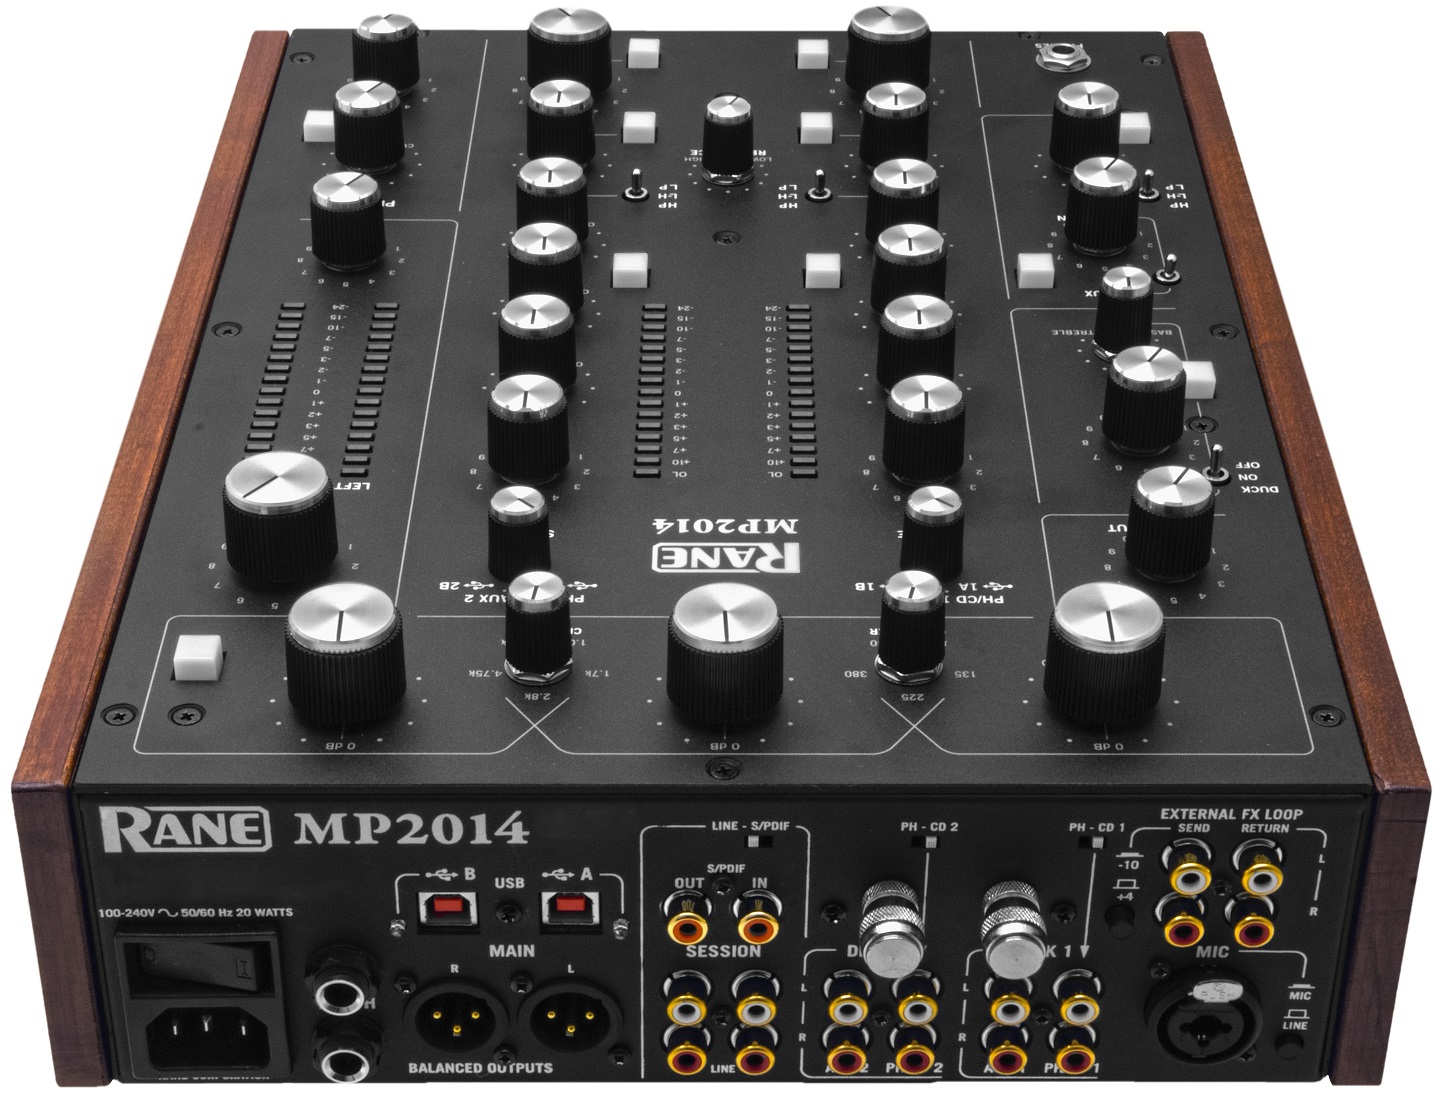 RANE MP2014 MIXER DJ A MANOPOLE 2 CANALI RIAA 2 USB TRAKTOR SCRATCH SPDIF EQ 3 BANDE 1